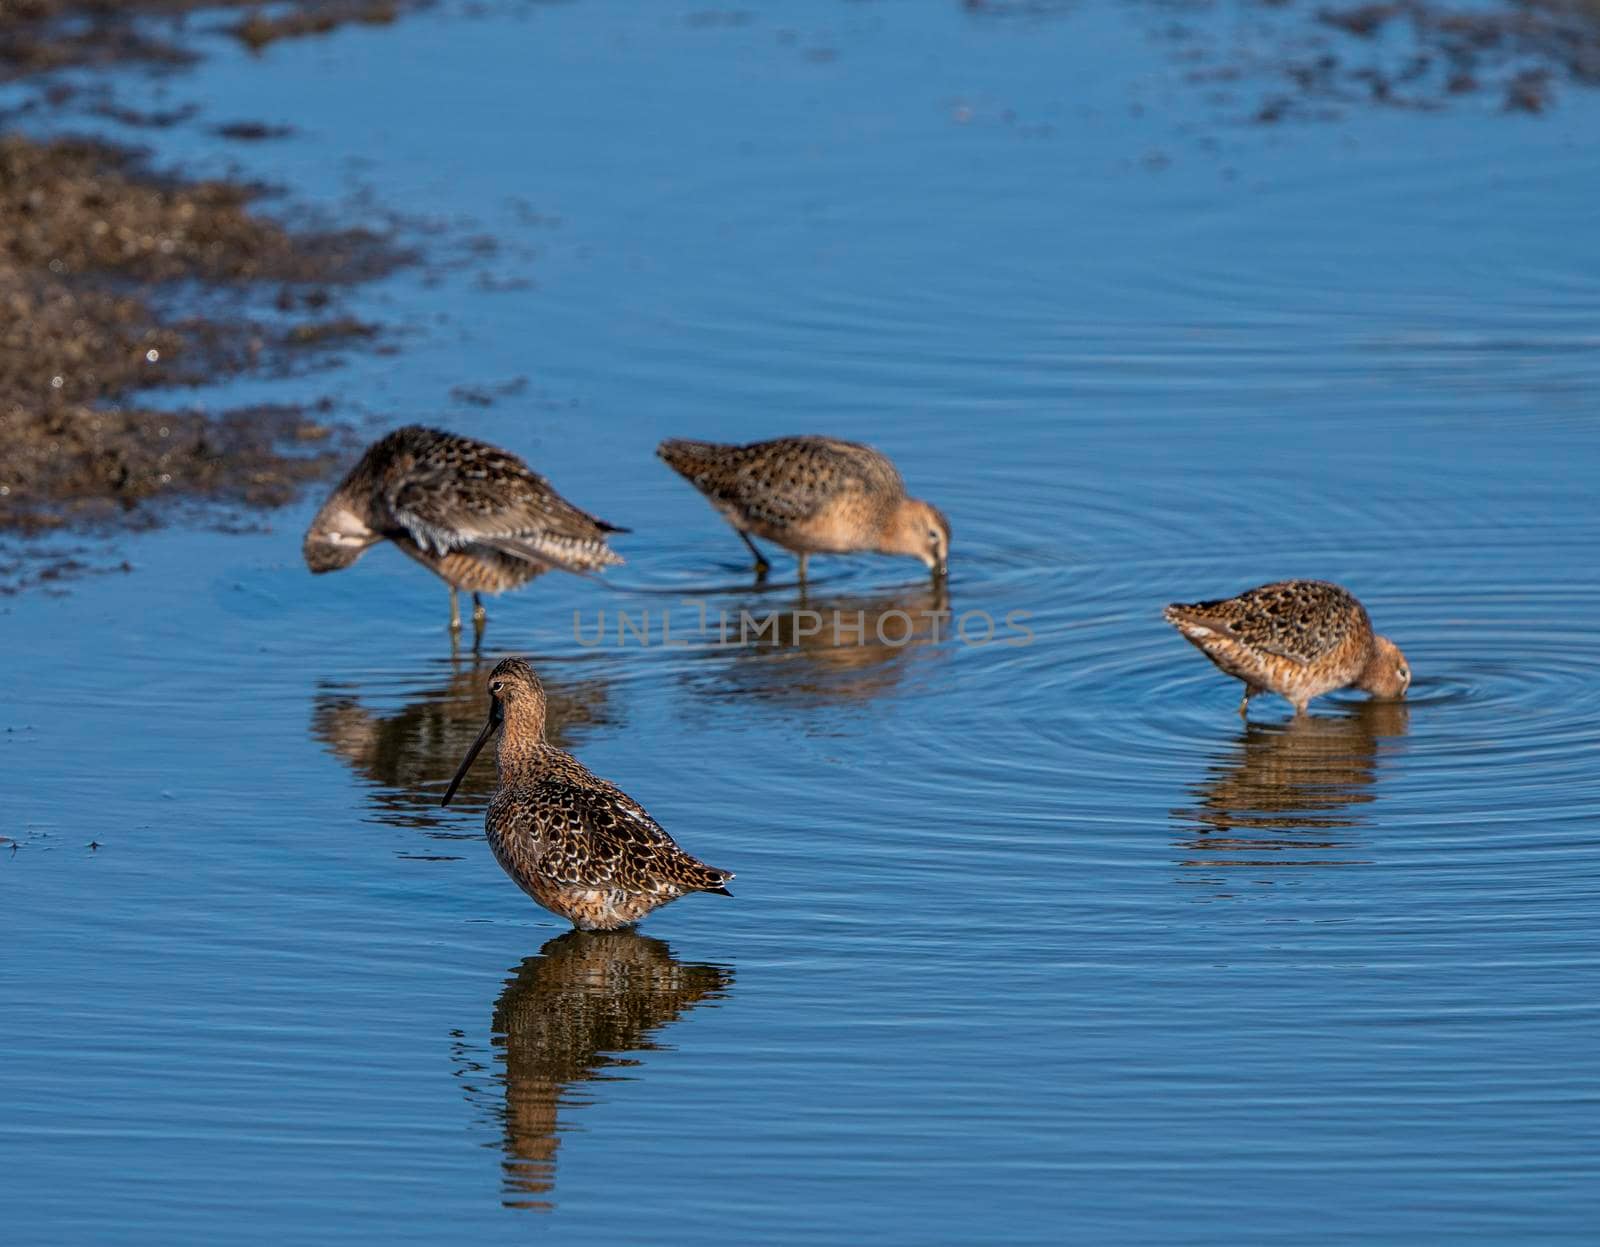 Godwit Saskatchewan Canada shorebird migration feeding pond